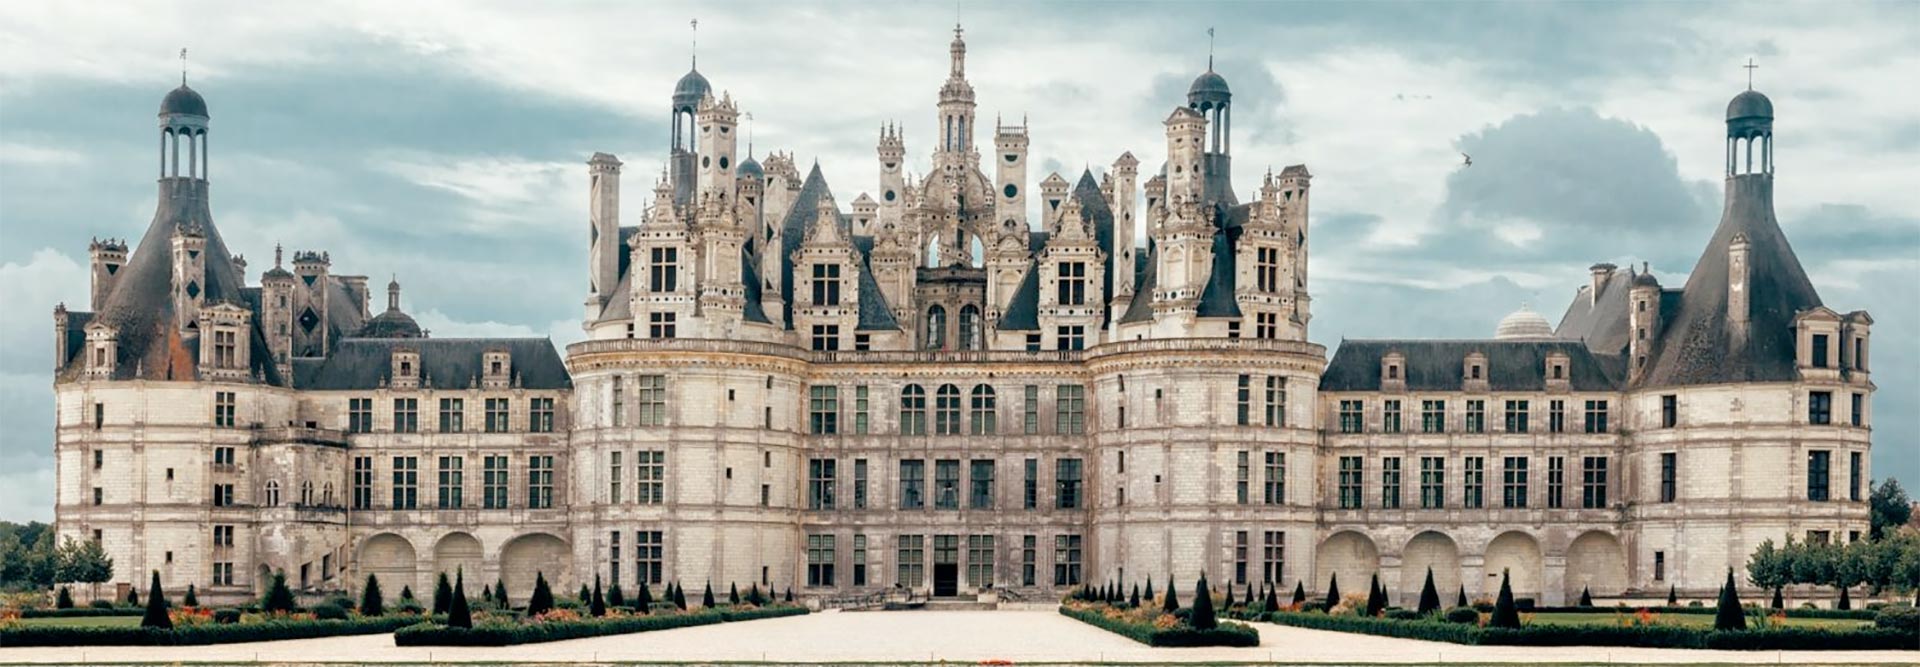 The Chateau de Chambord